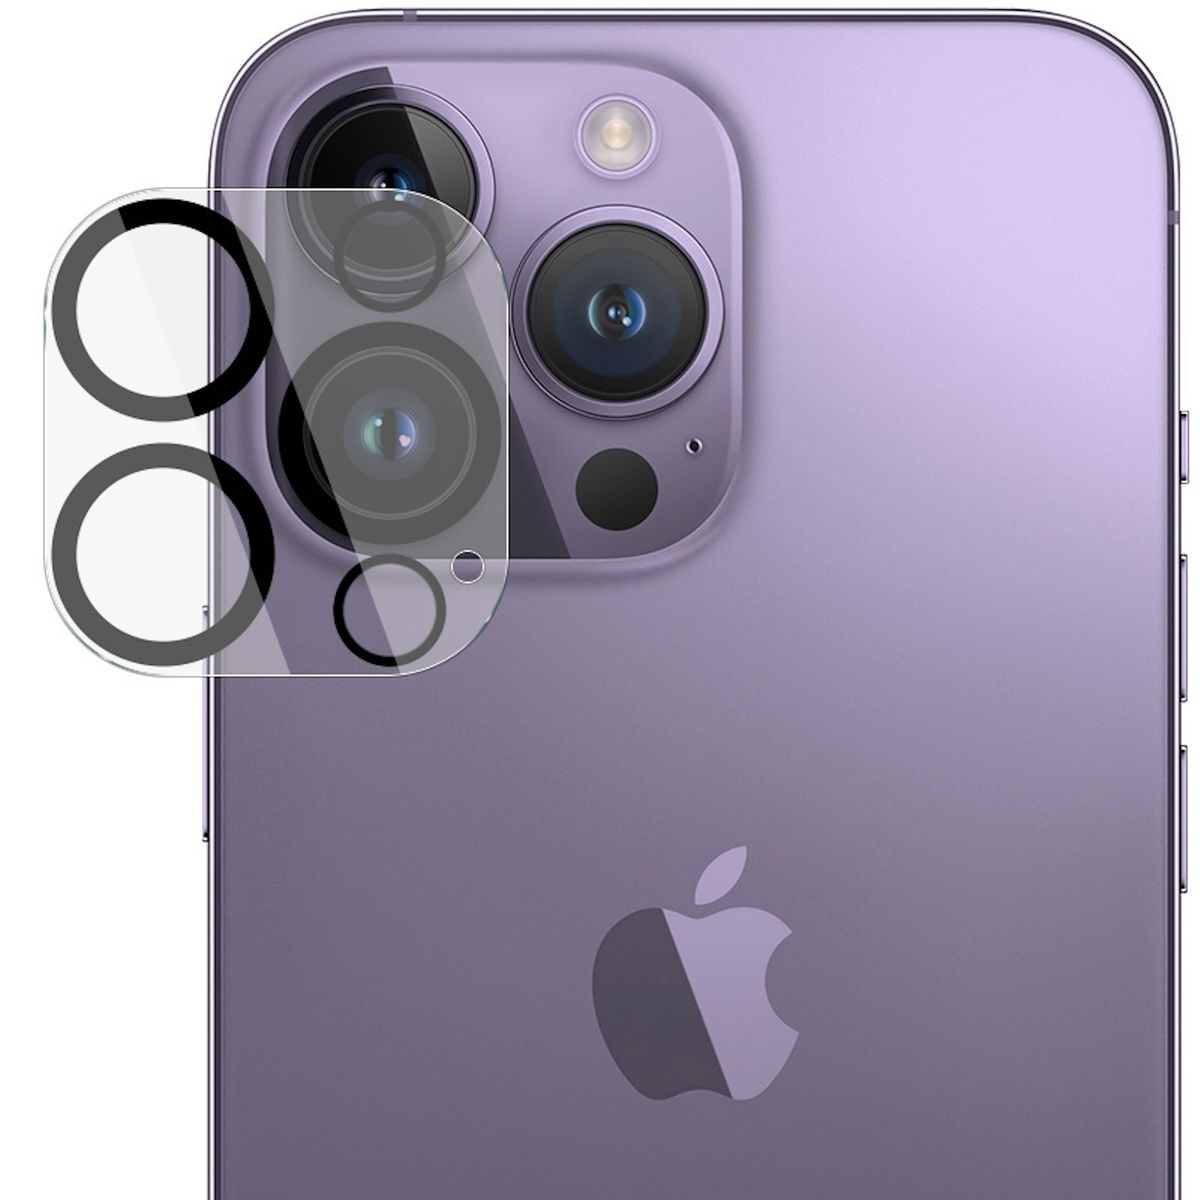 15 Max) / Linse Kamera Pro WIGENTO Hart Schutzglas(für 15 Pro Apple Glas Schutzglas iPhone